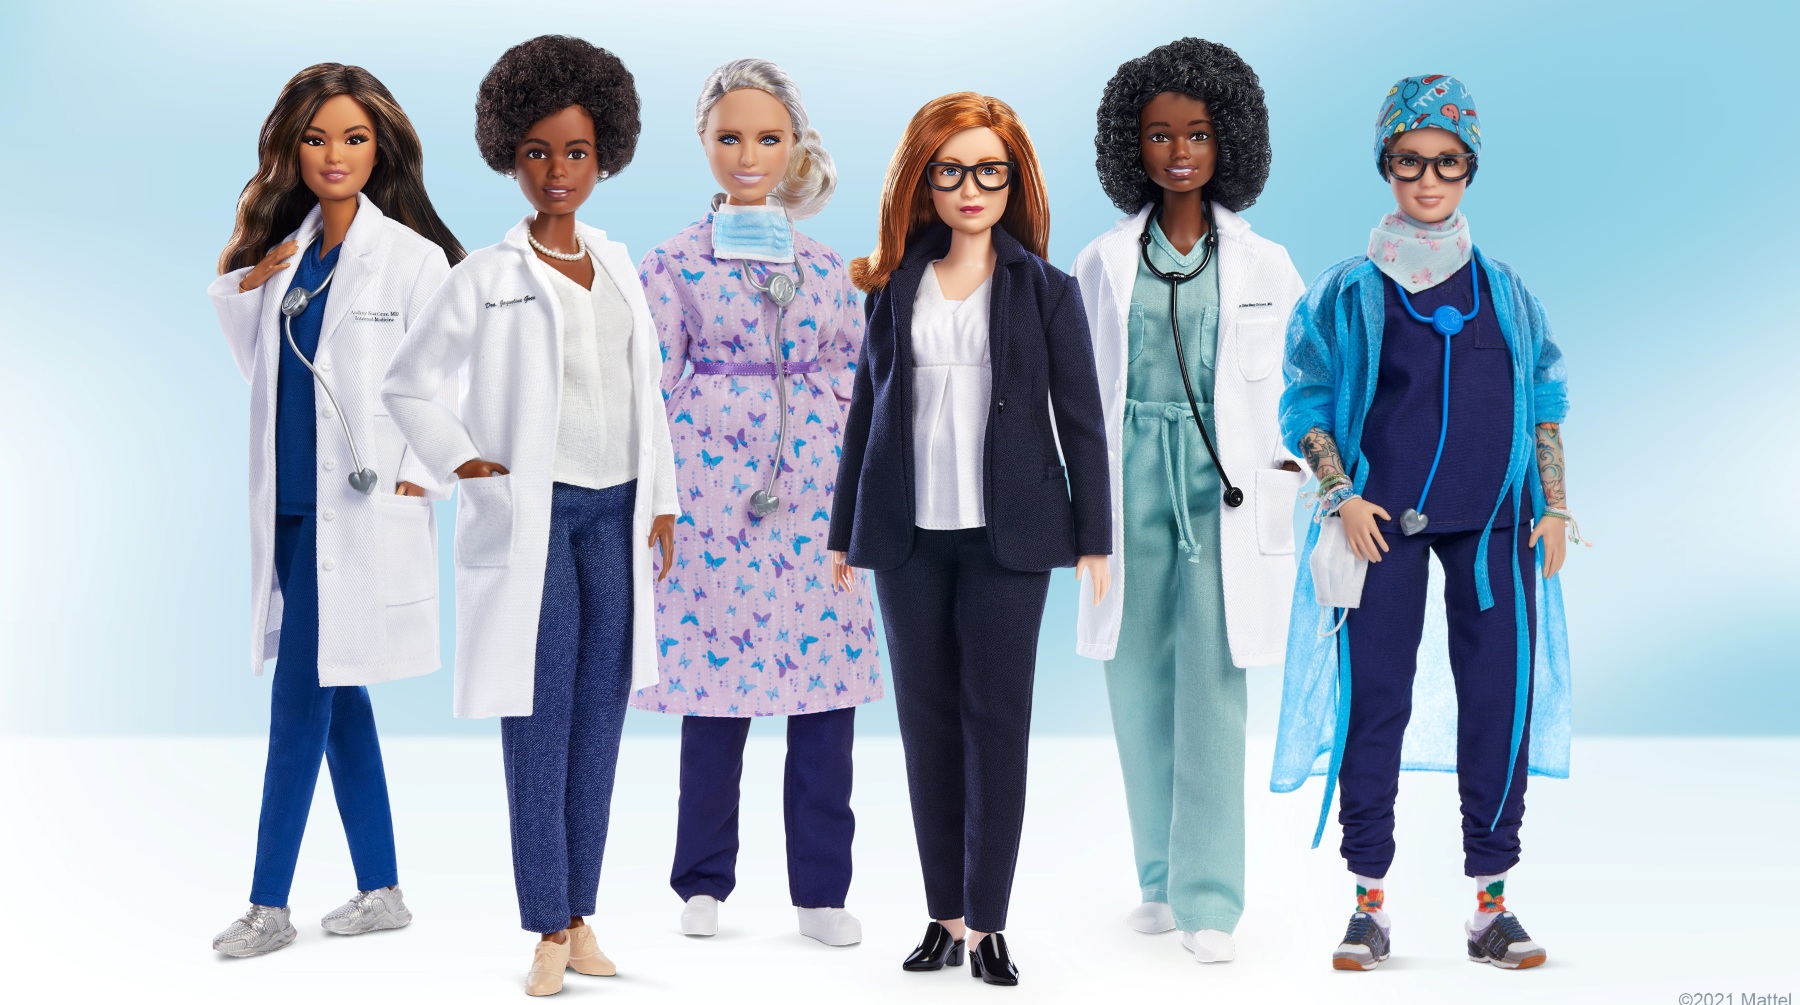 Barbie თანამედროვე გმირების პატივსაცემად მისაბაძი ექიმების კოლექციას უშვებს